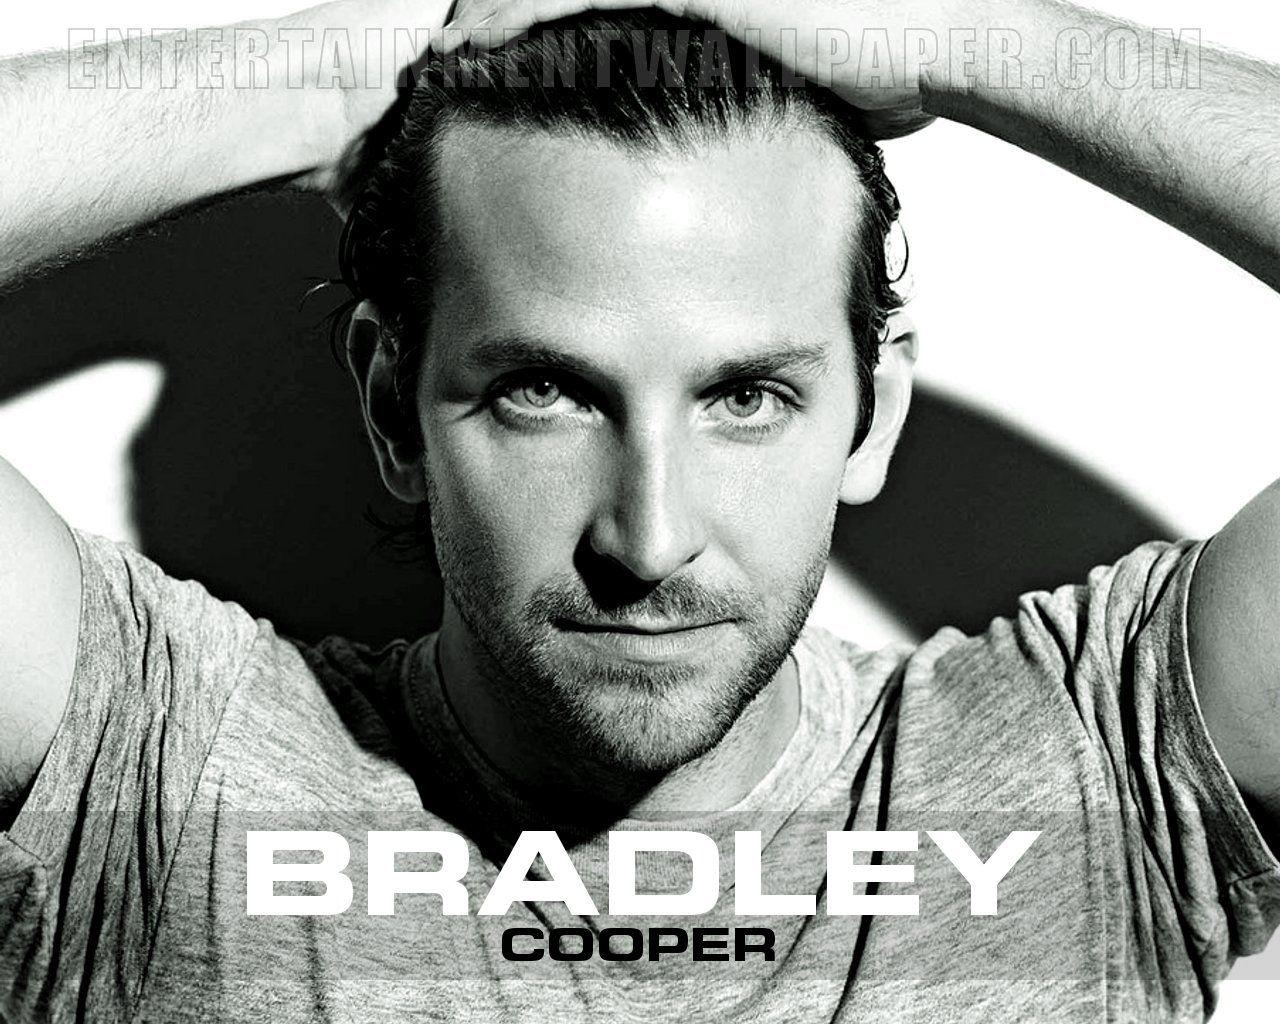 بردلی کوپر (Bradley Cooper)